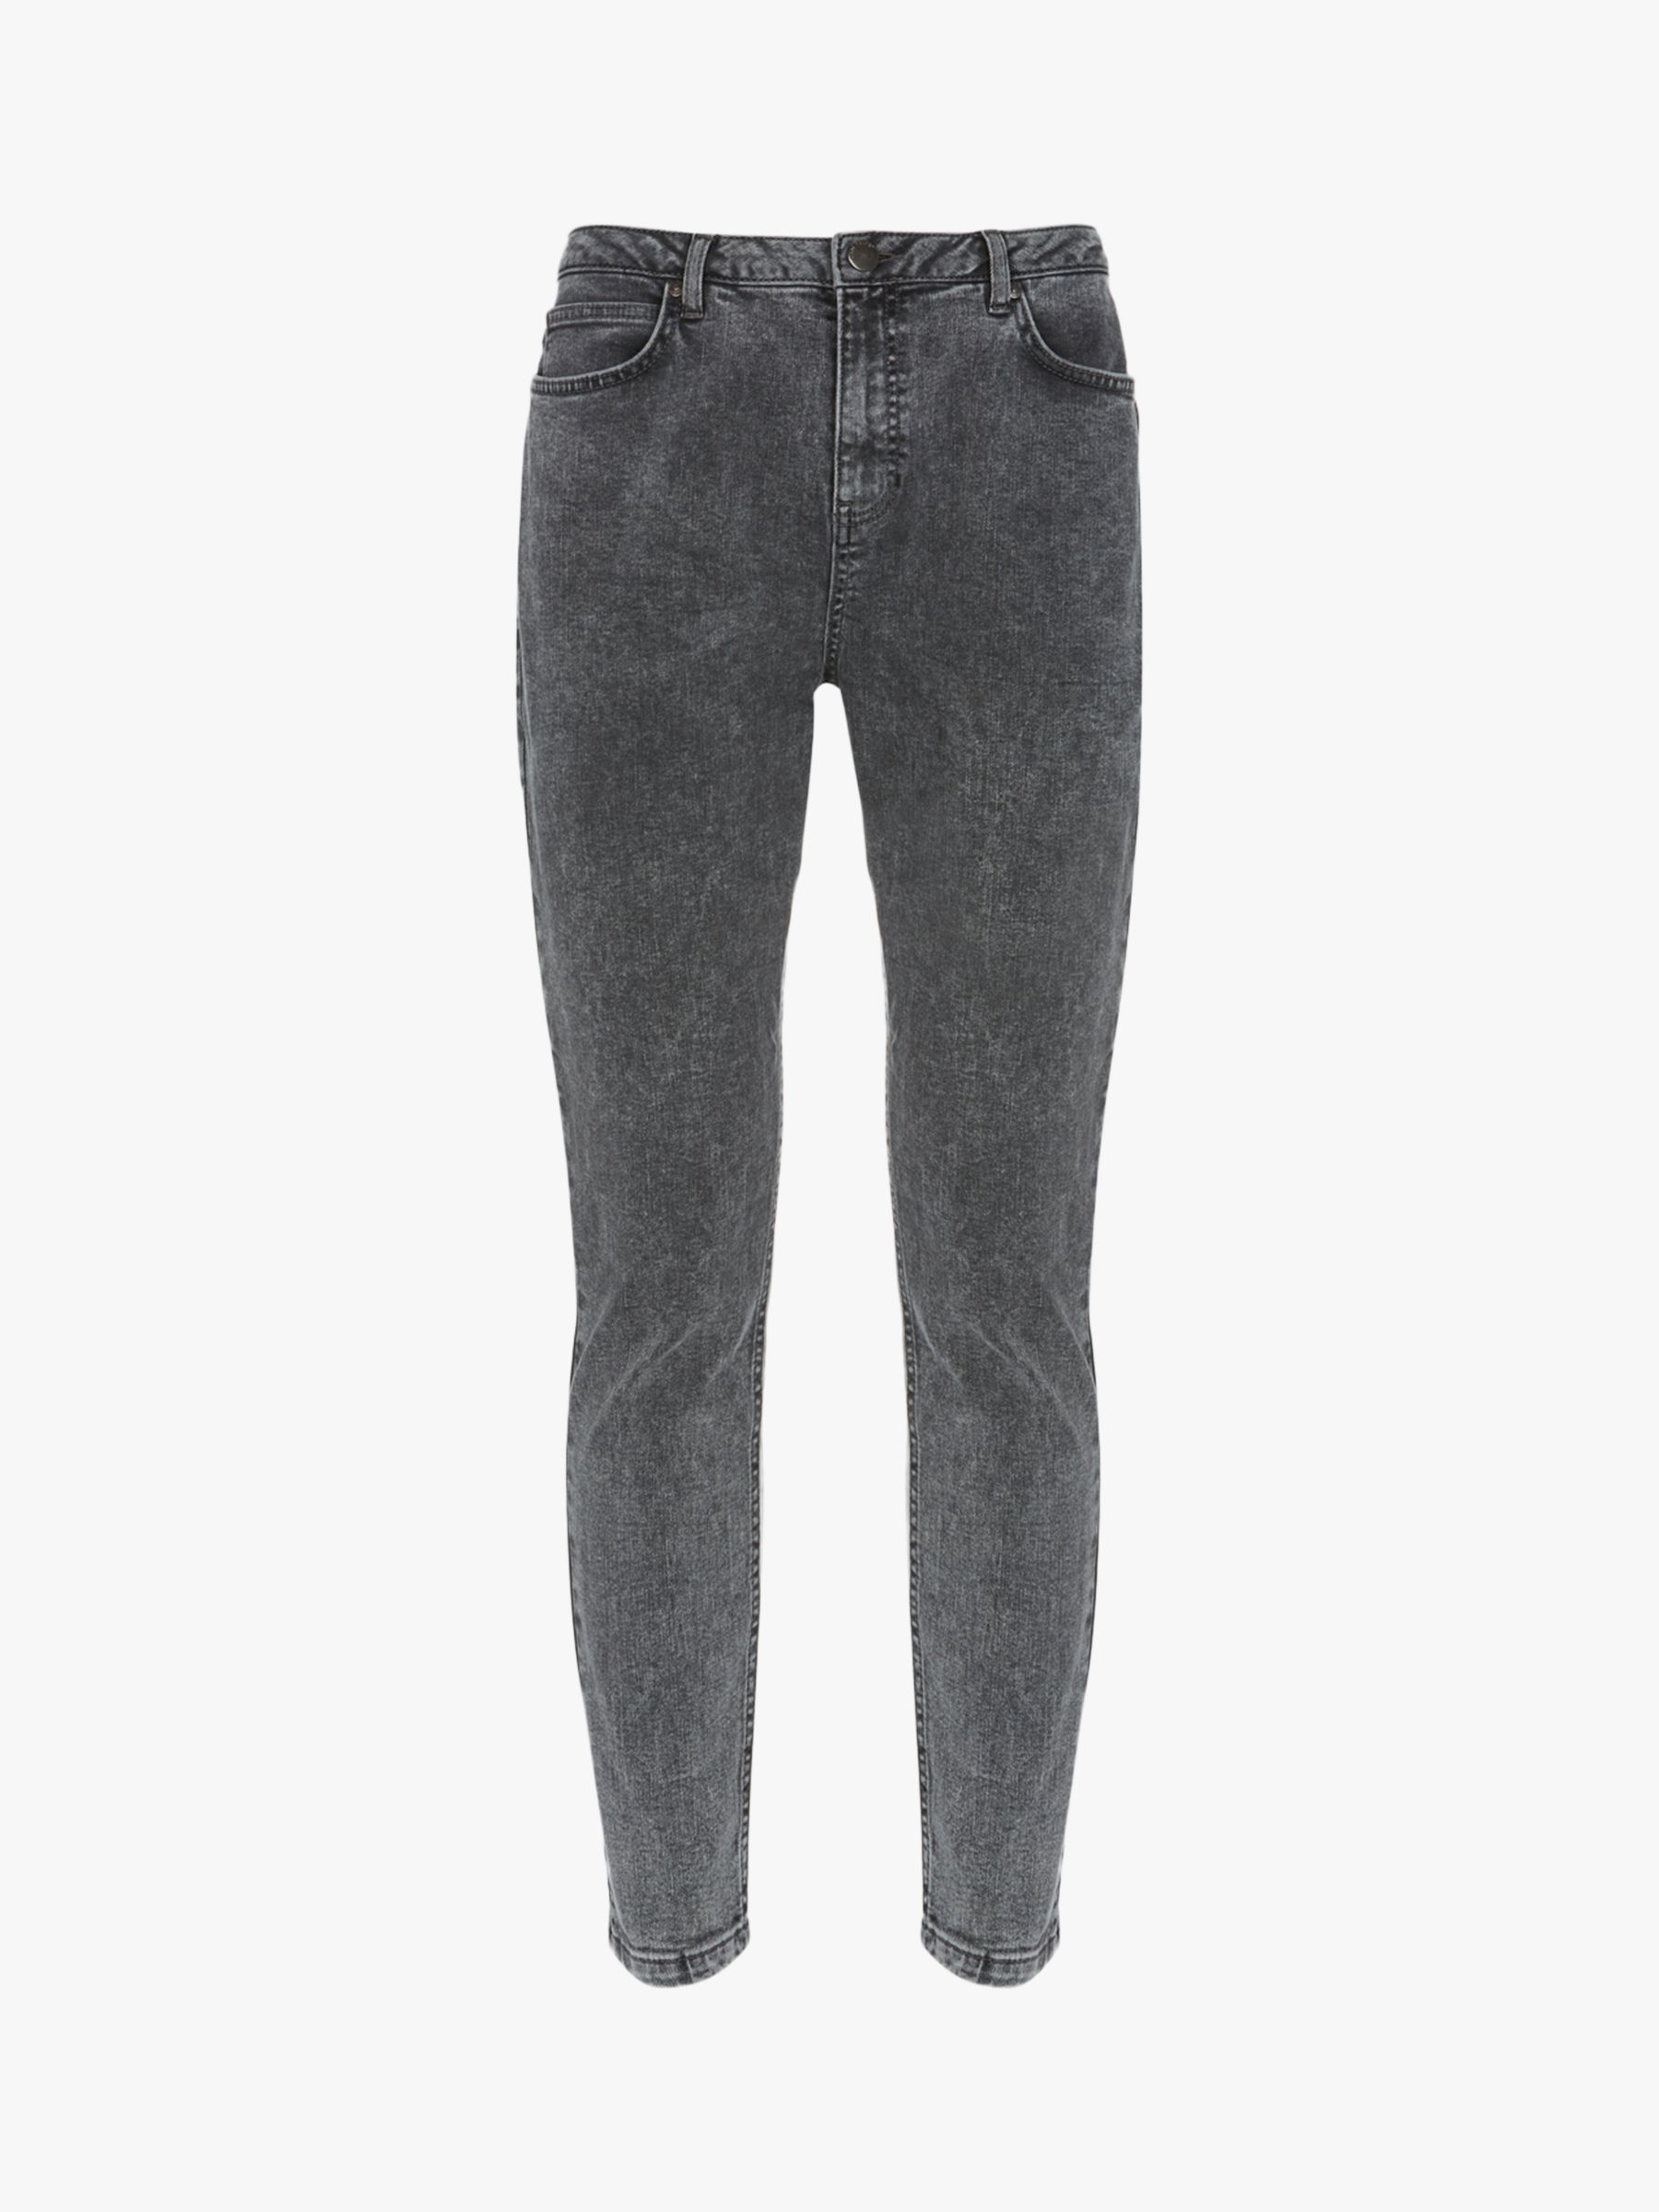 grey wash jeans